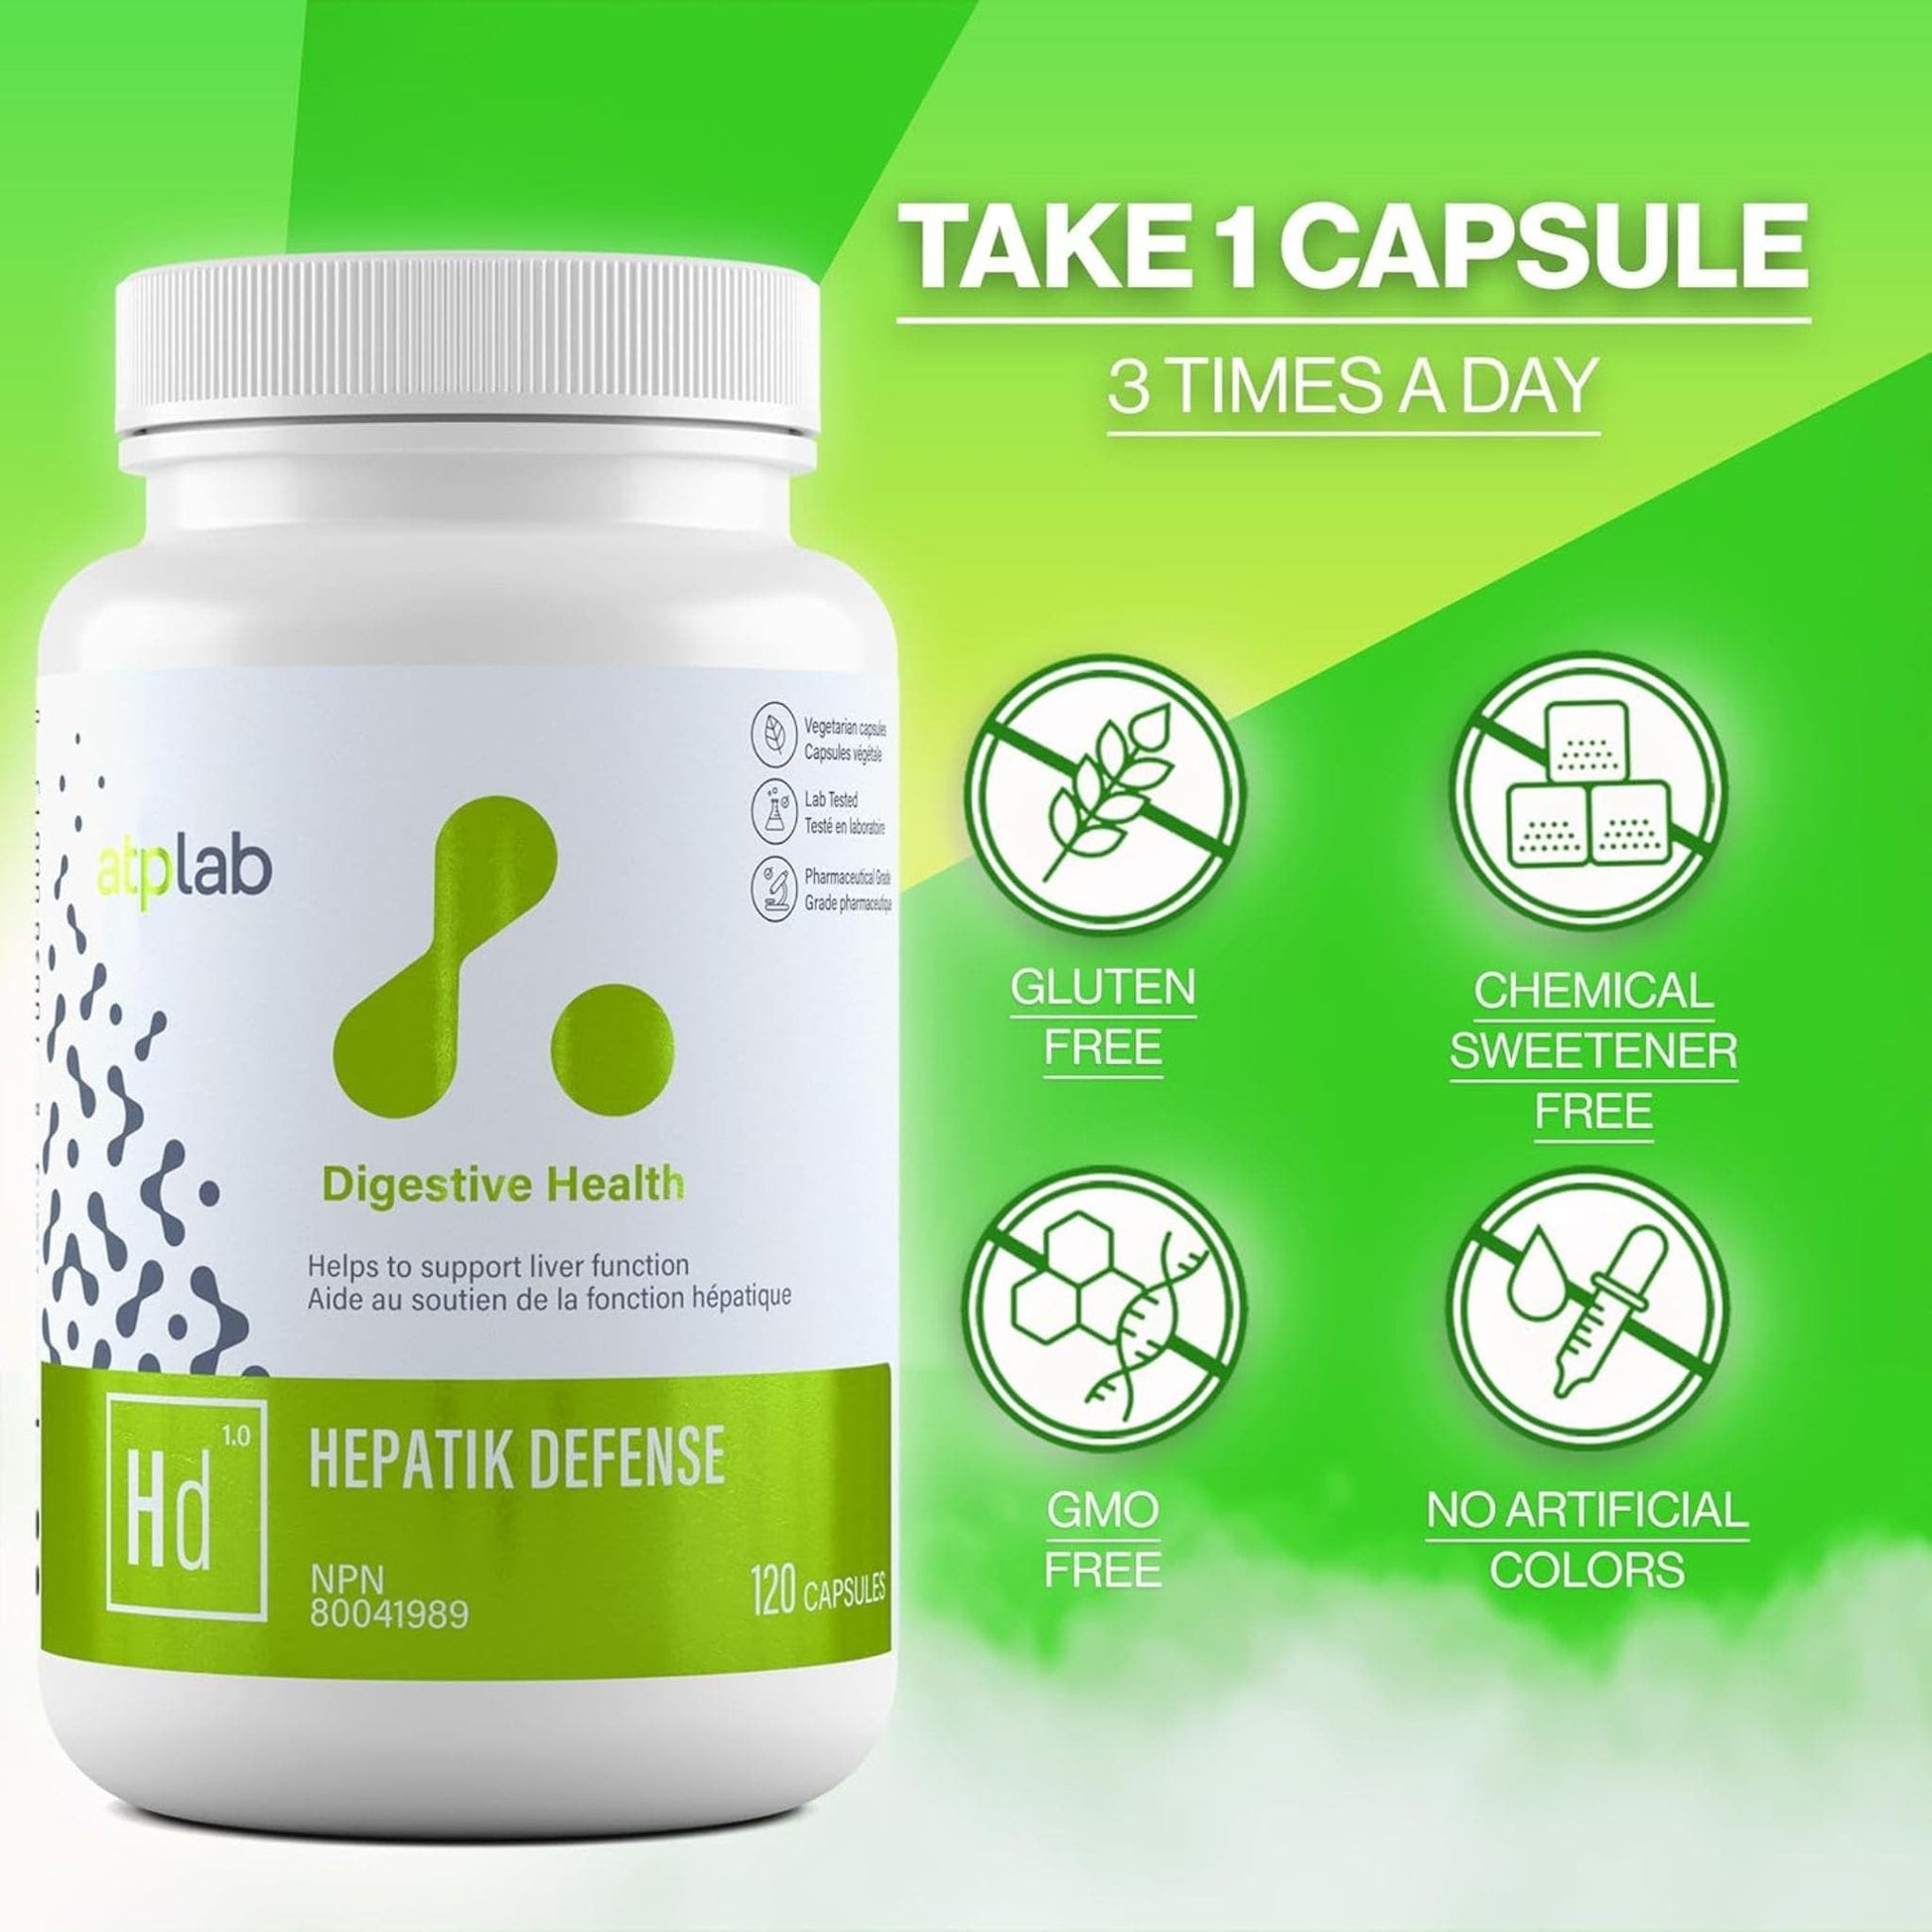 120 Vegetable Capsules | ATP Lab Hepatik Defense